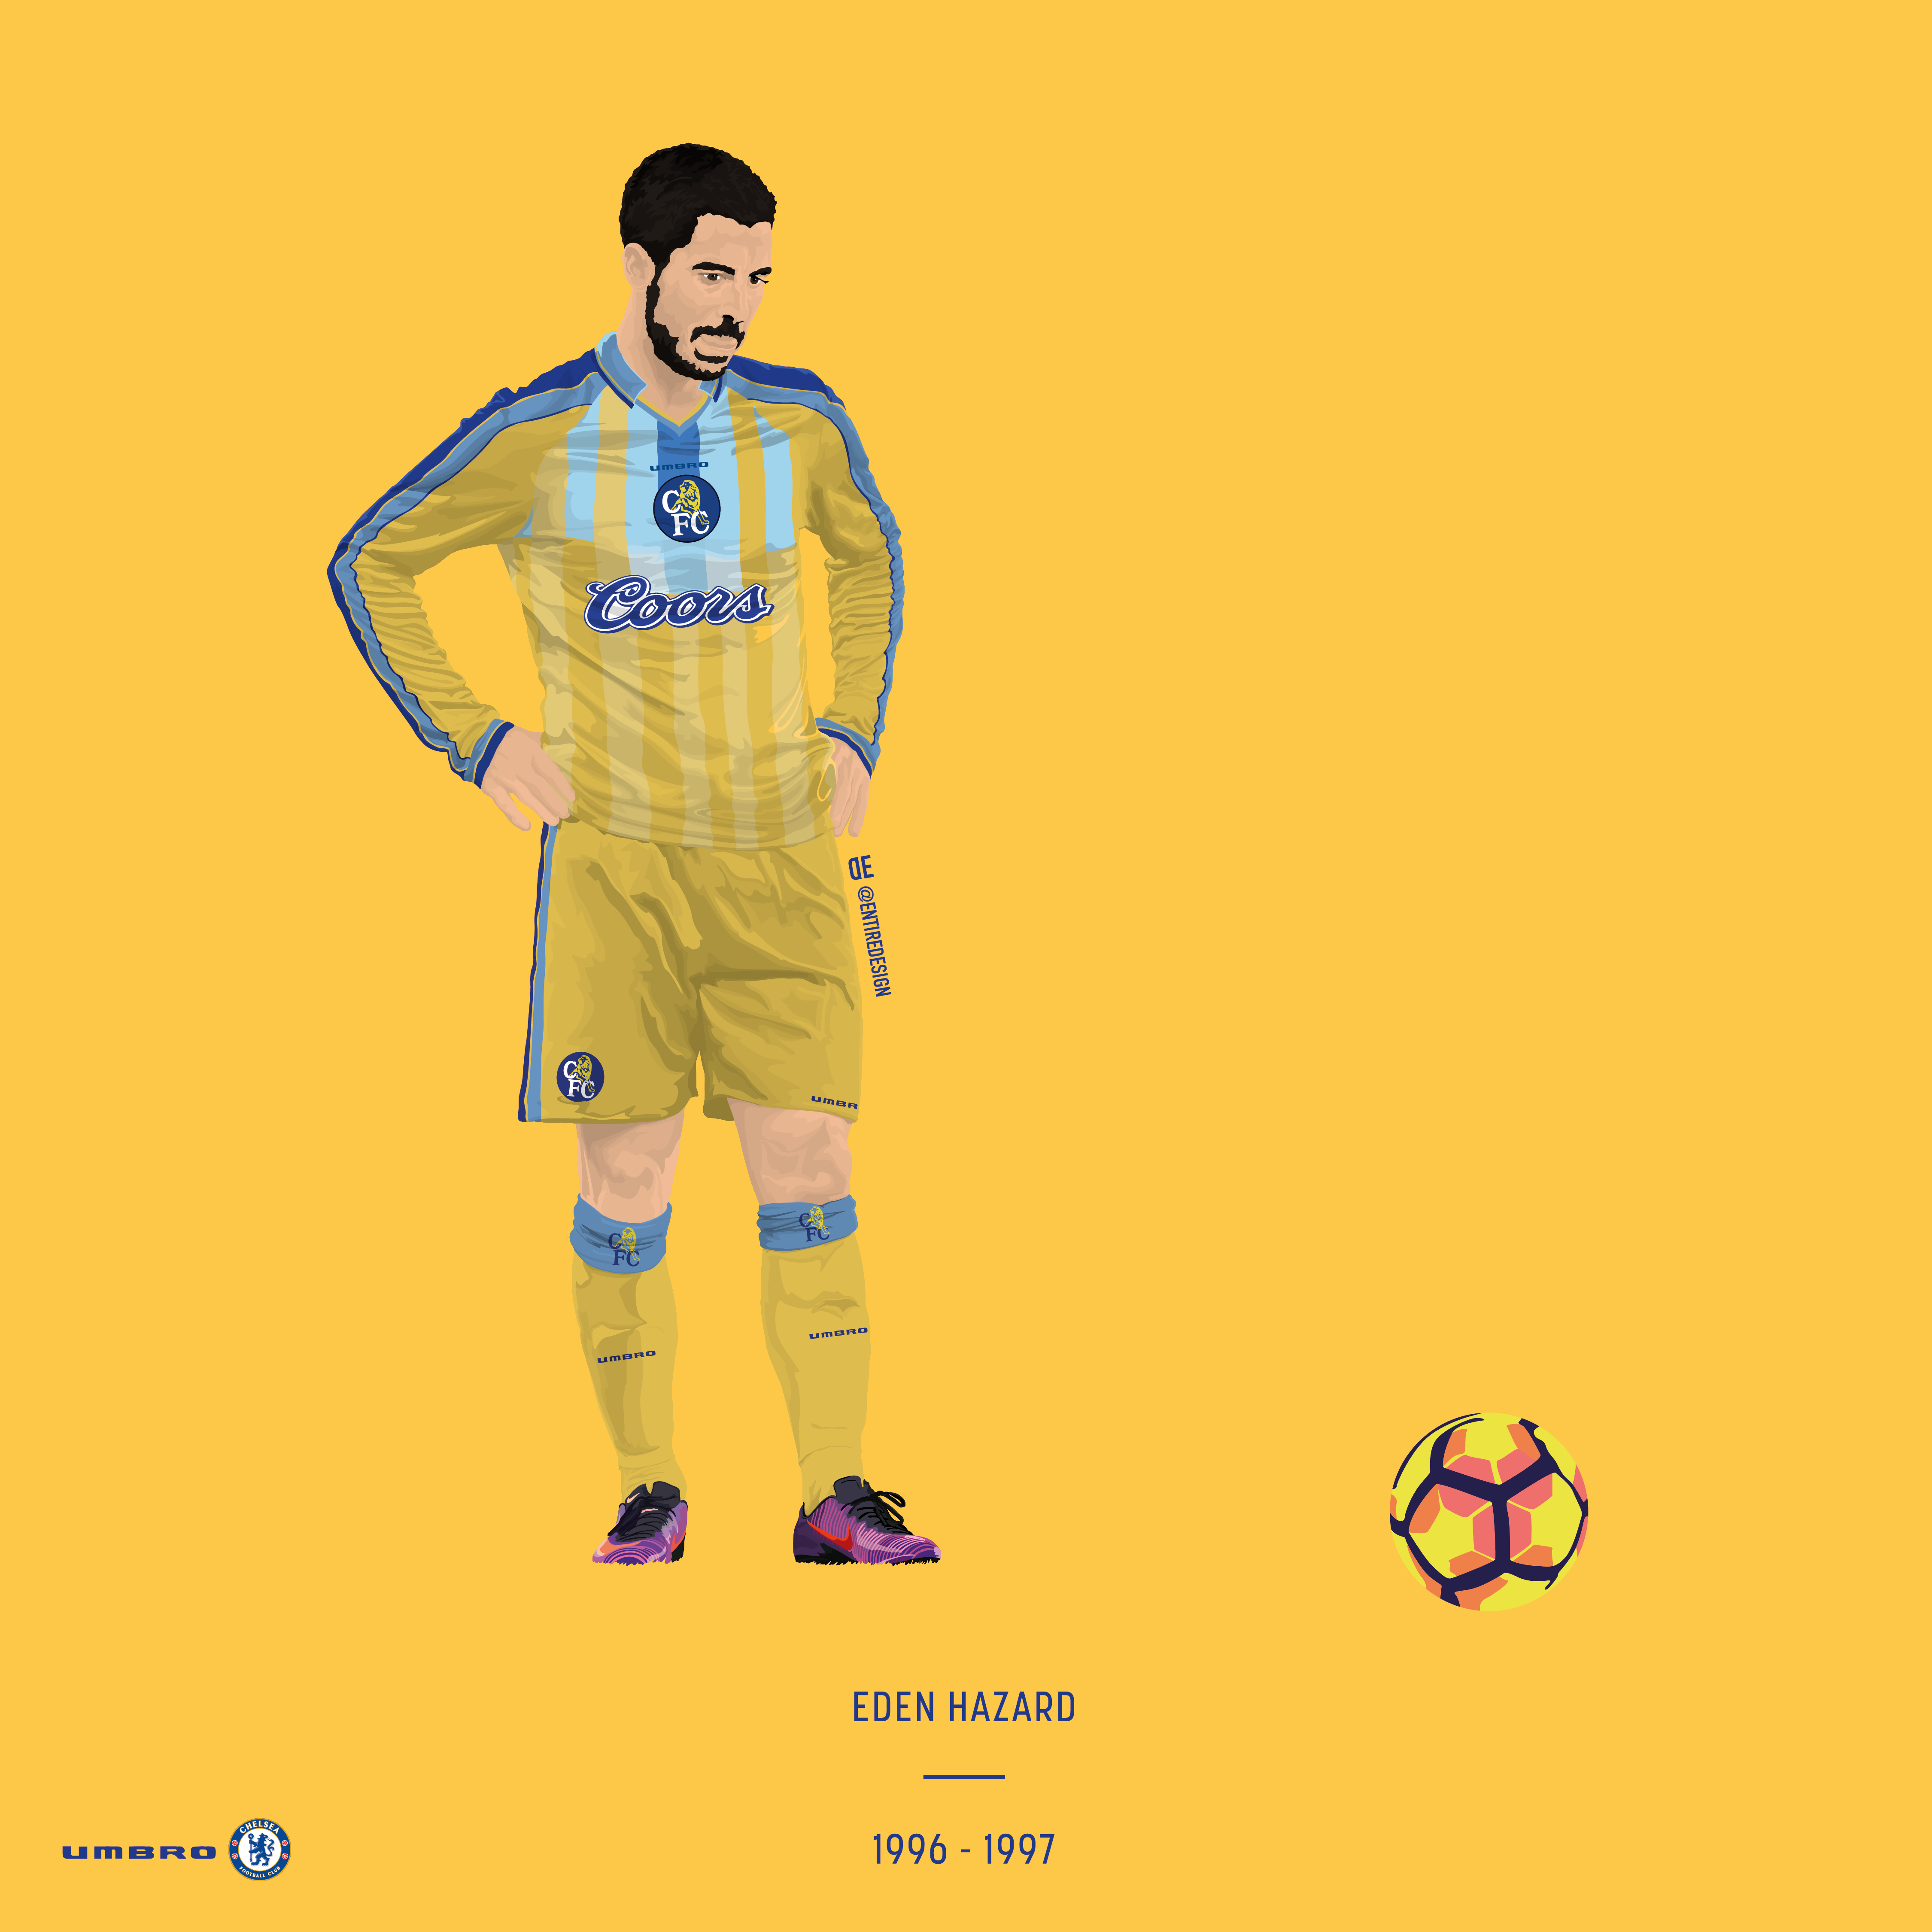 Chelsea's Eden Hazard in a retro kit